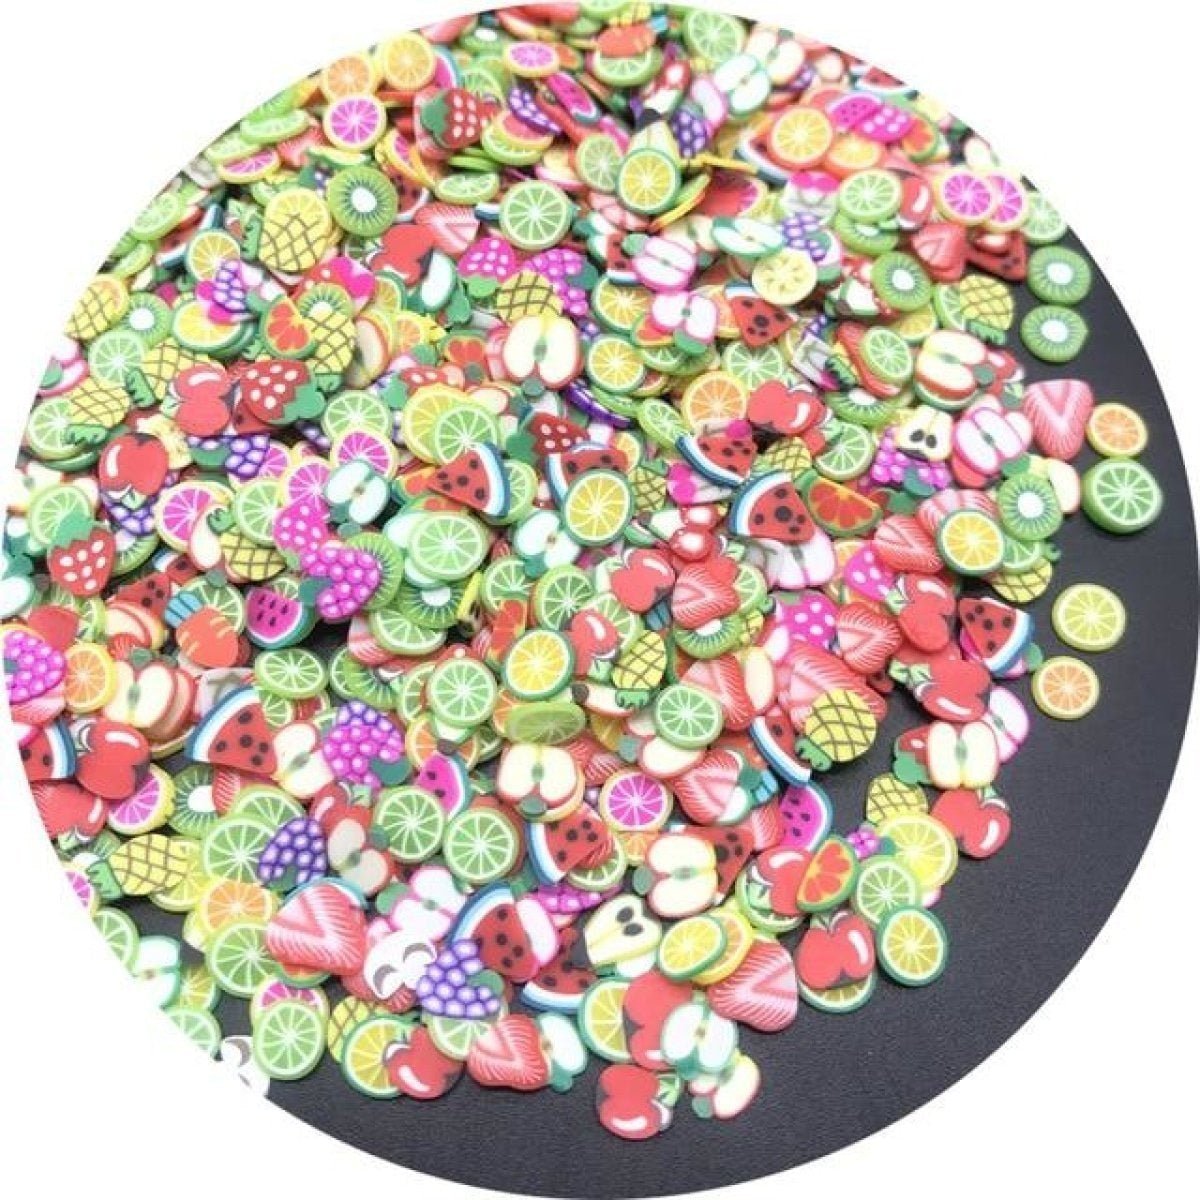 1000pcs 3-6mm Mixed Fruit Animal Clay Beads Decoration Crafts Scrapbook Nail Art - Mixed Fruits - - Asia Sell